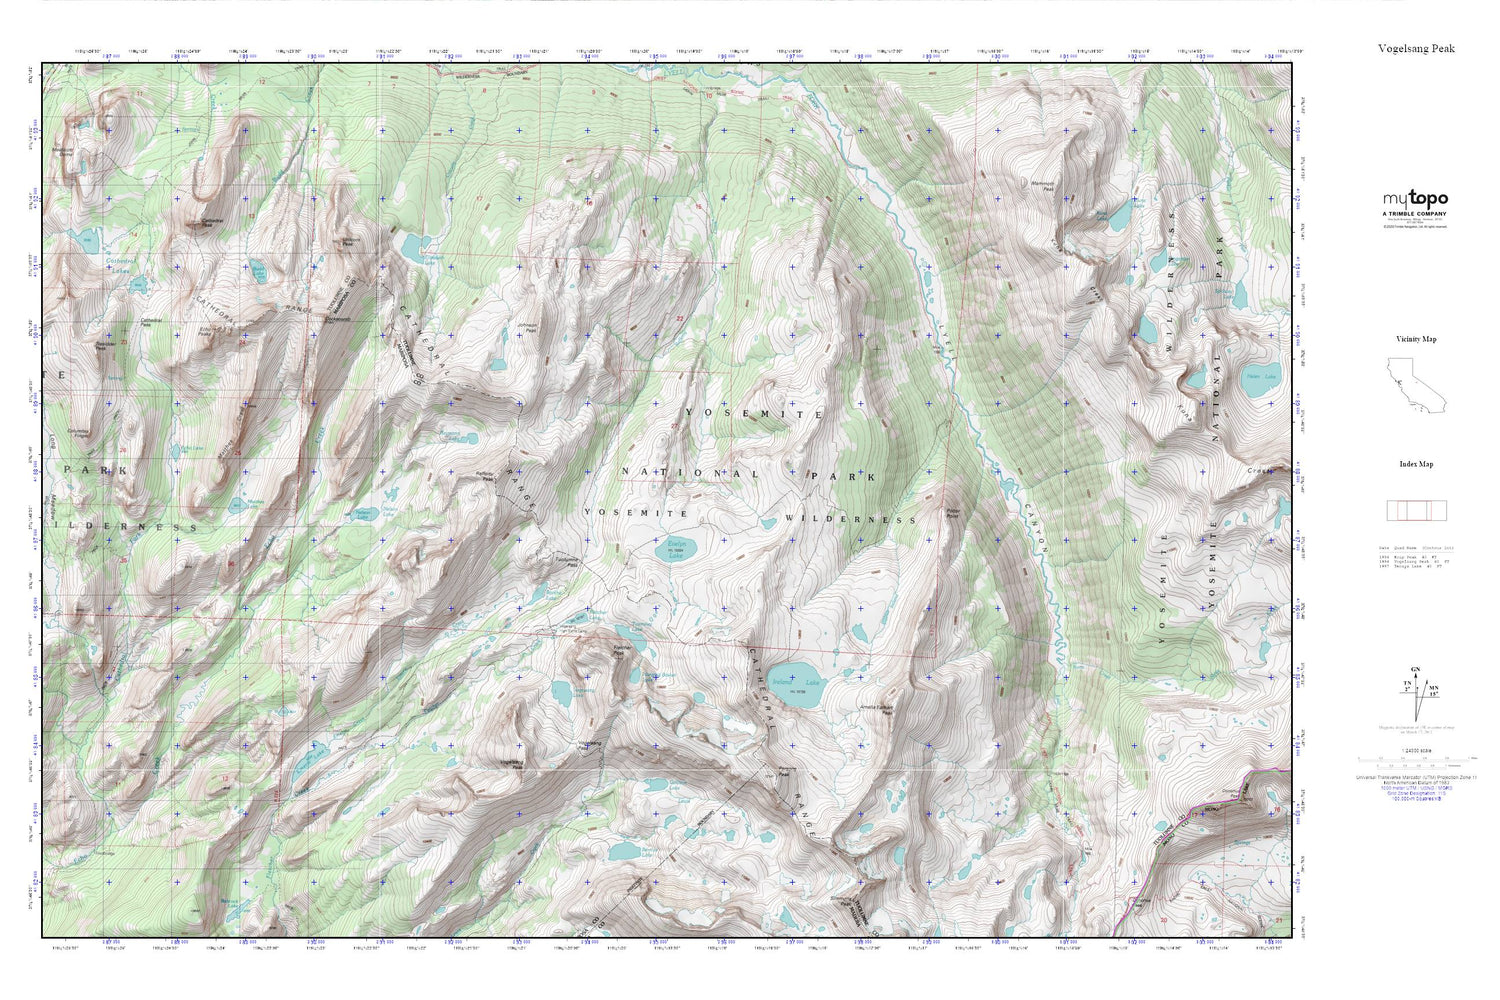 Vogelsang Peak MyTopo Explorer Series Map Image